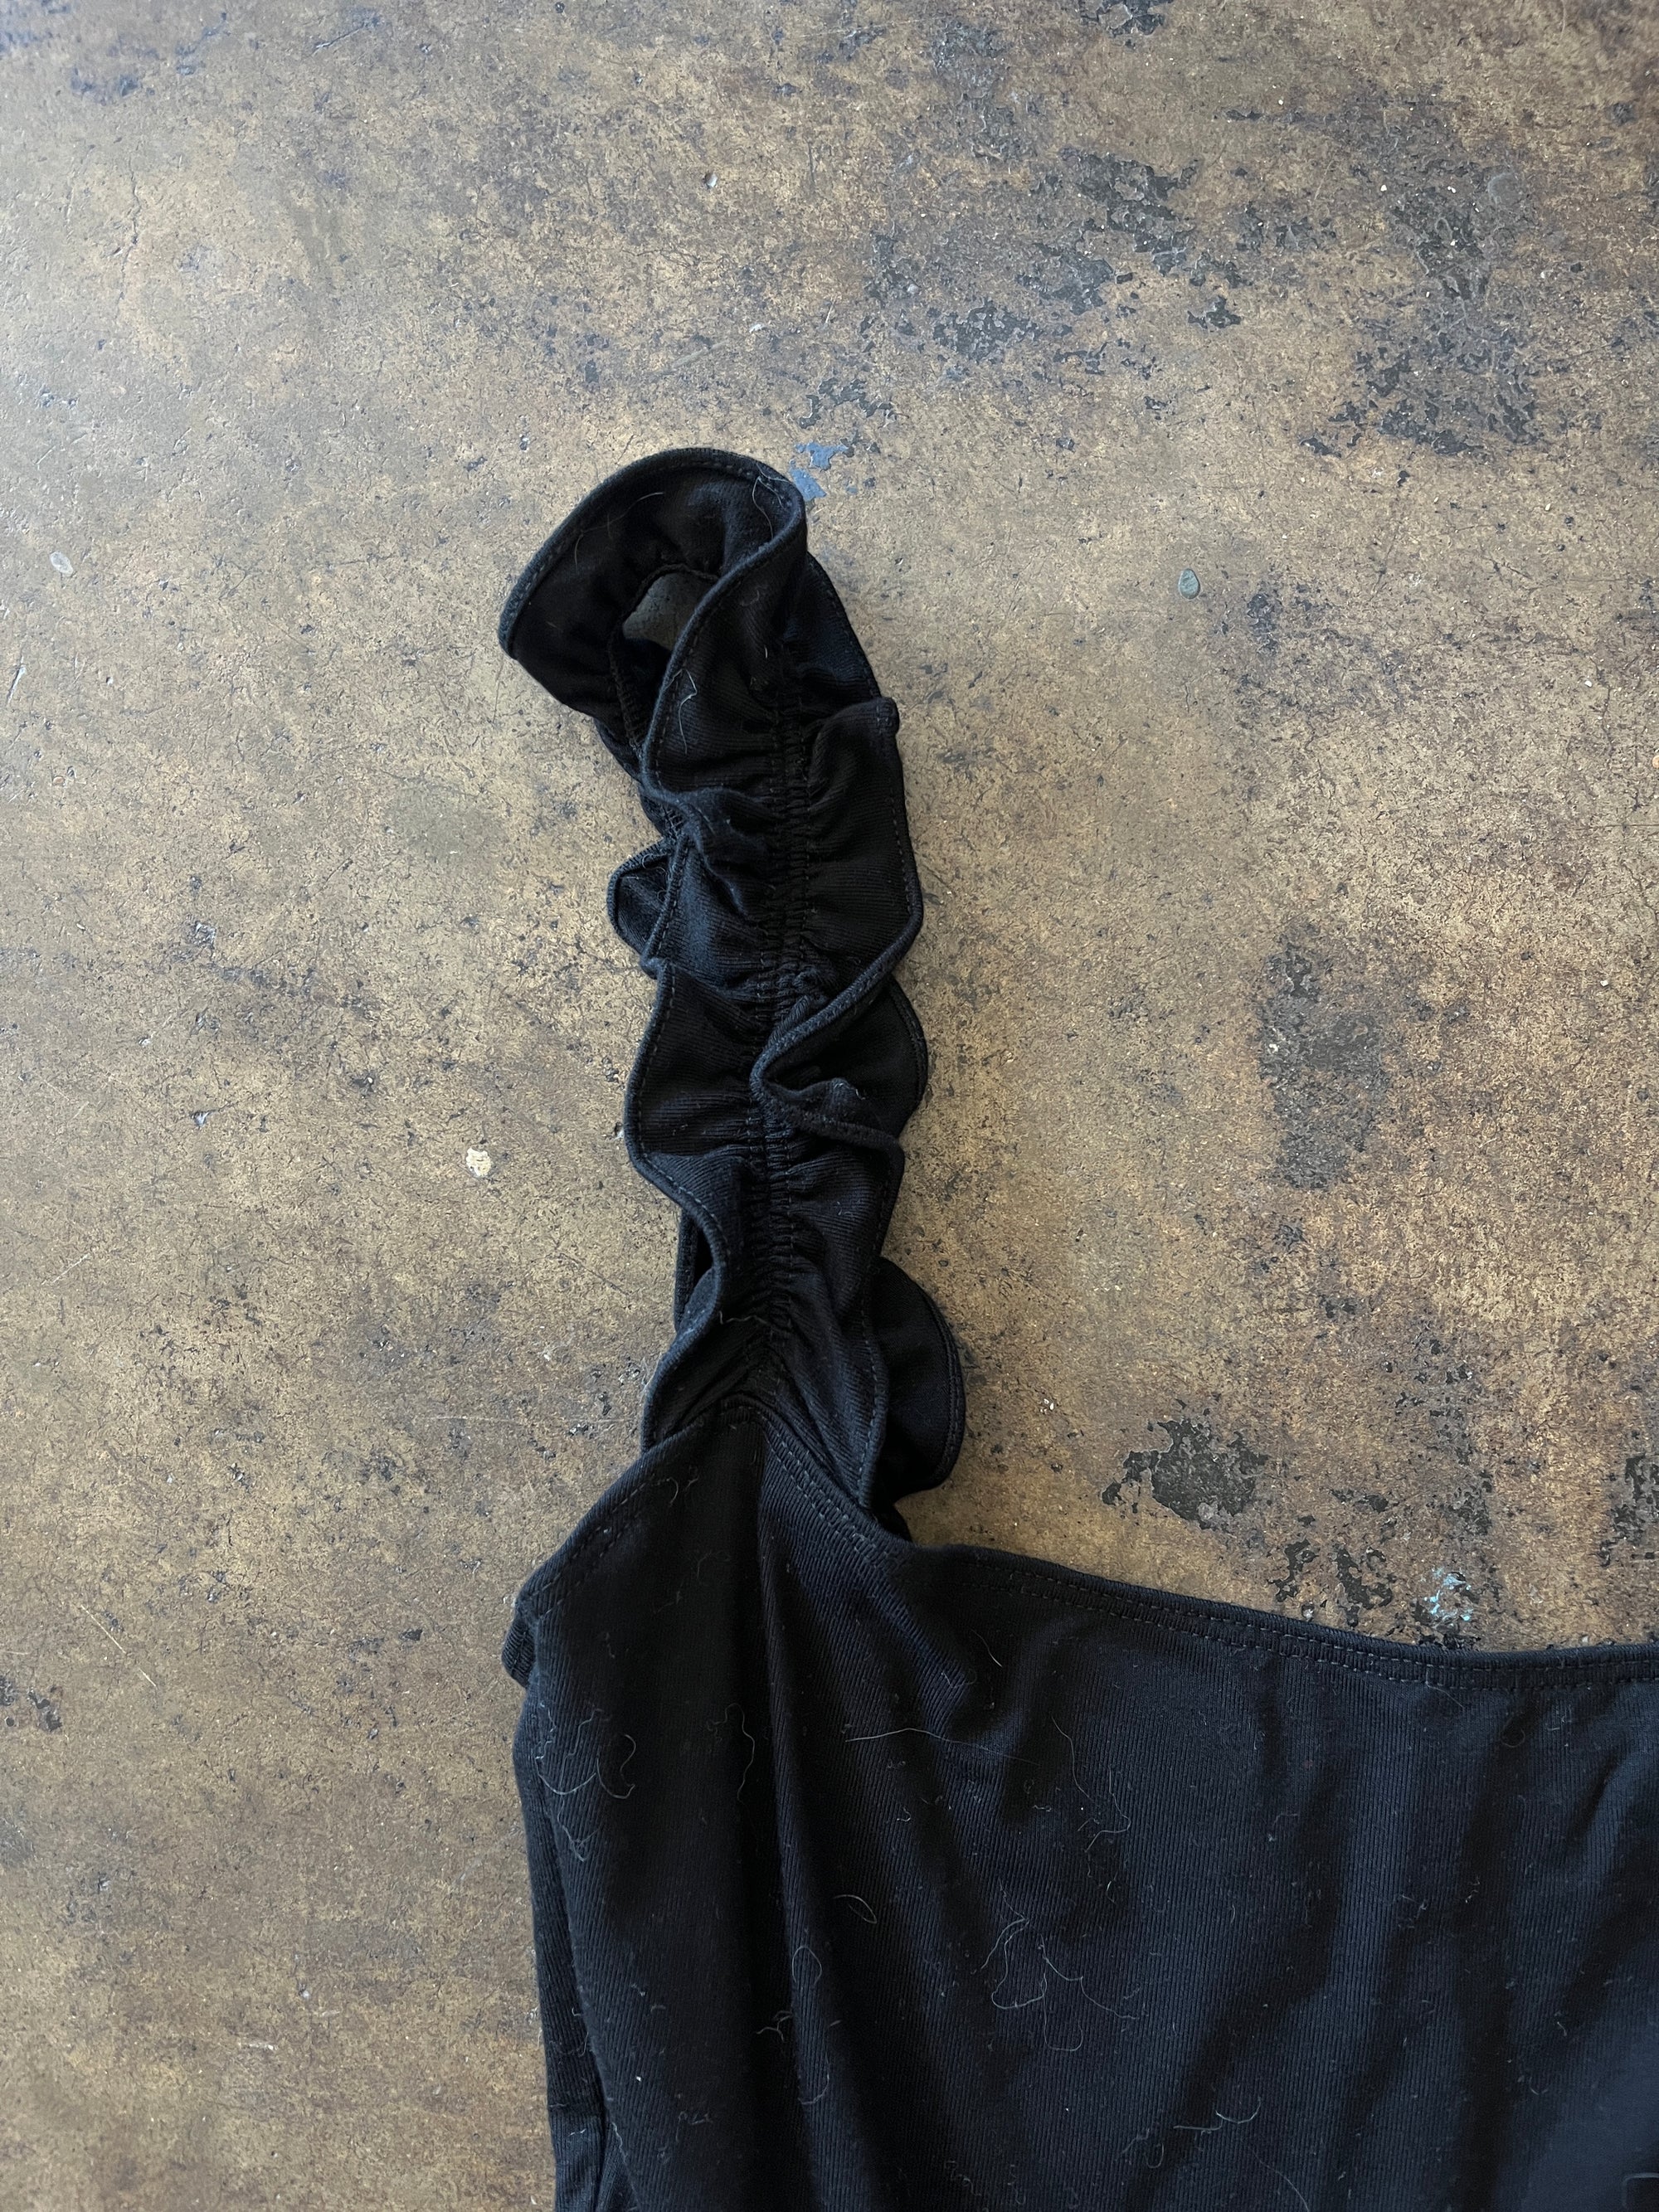 Reformation Black Jersey A-Line Dress